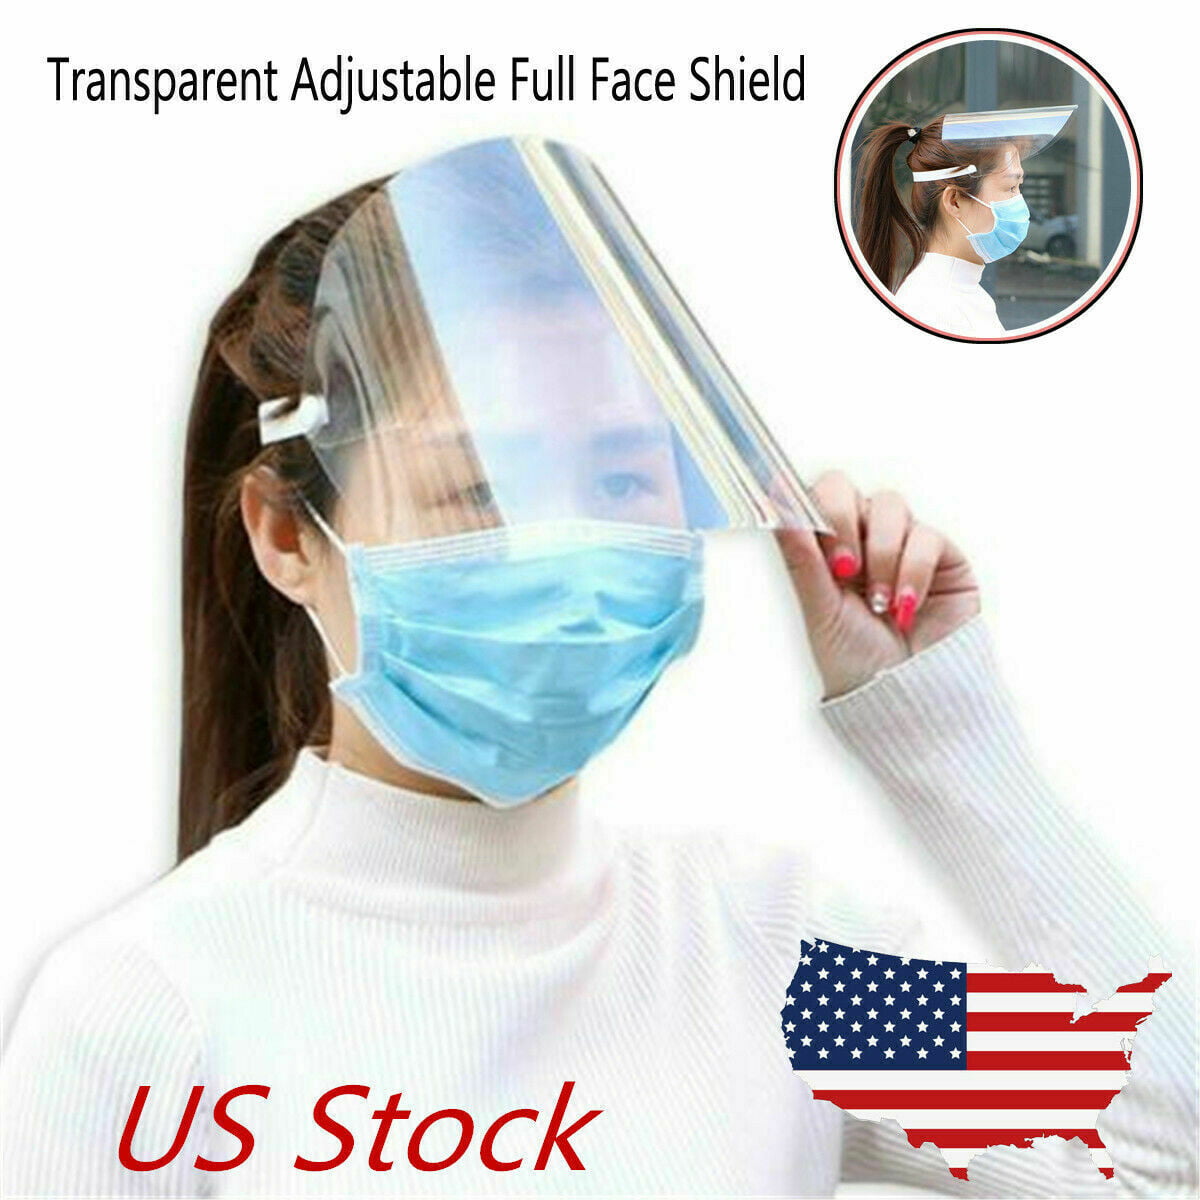 USA Clear Transparent Adjustable Full Face Shield Plastic Anti-fog Protective 